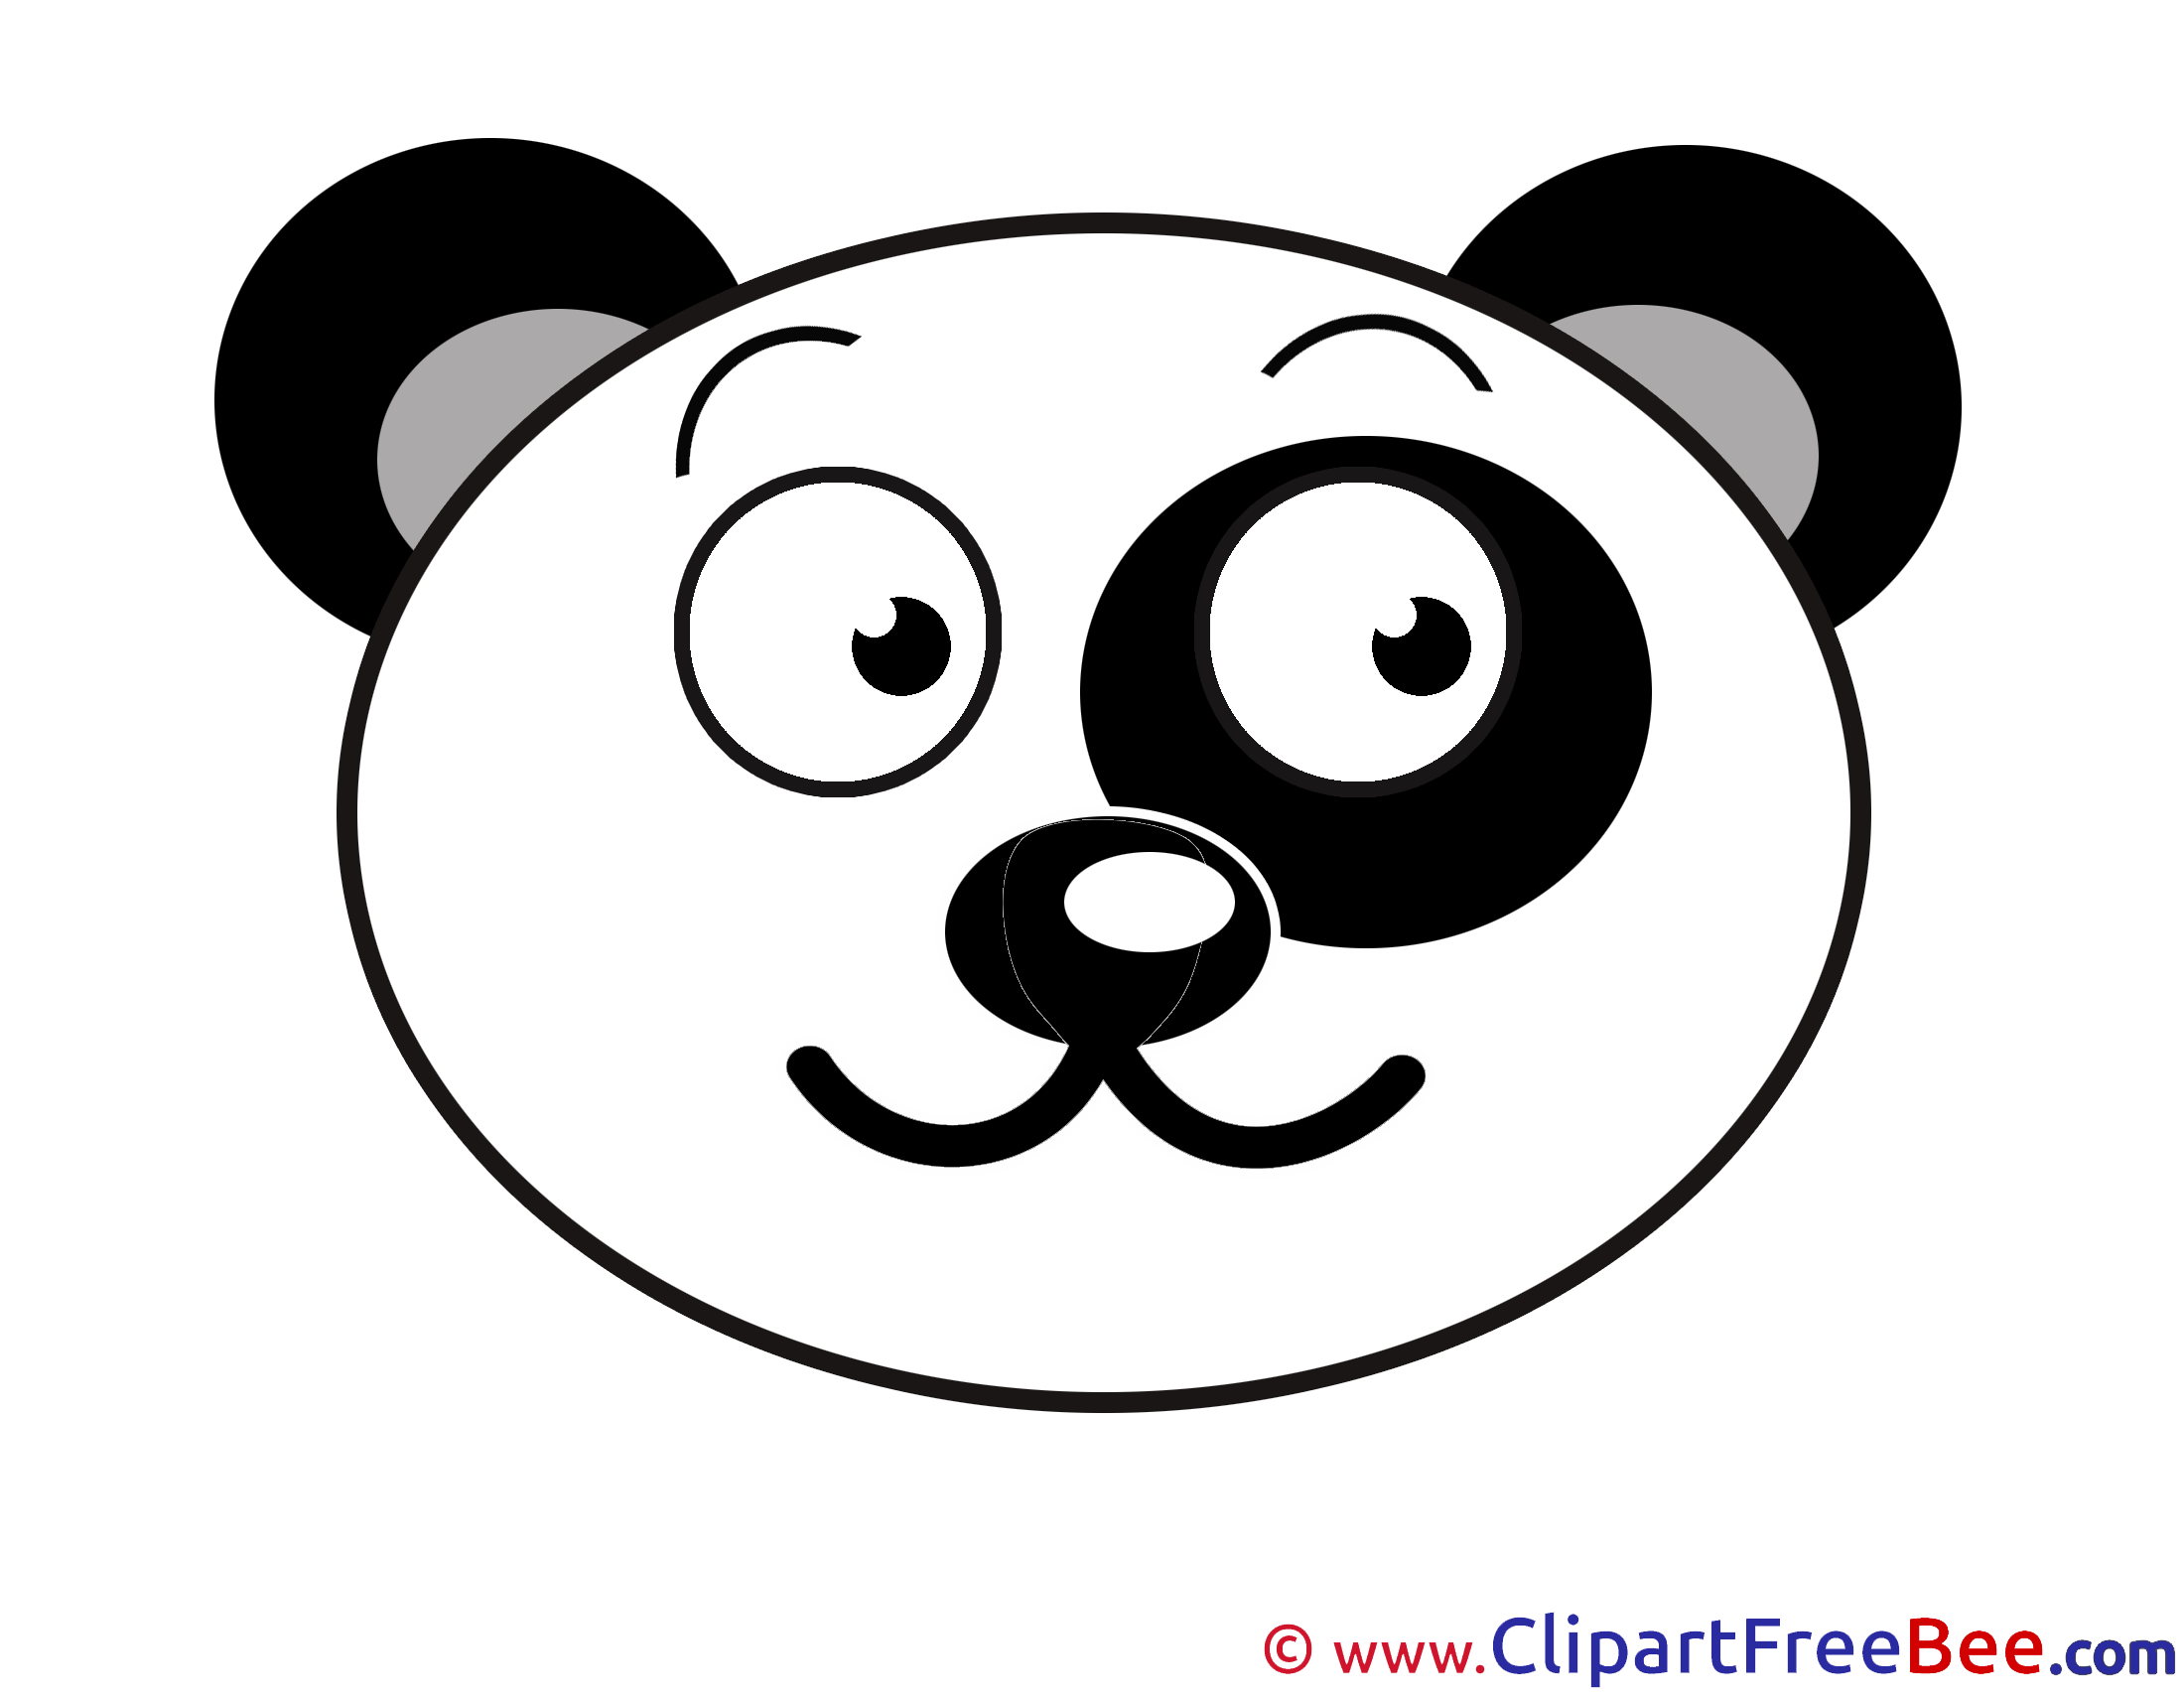 Panda printable Images for download